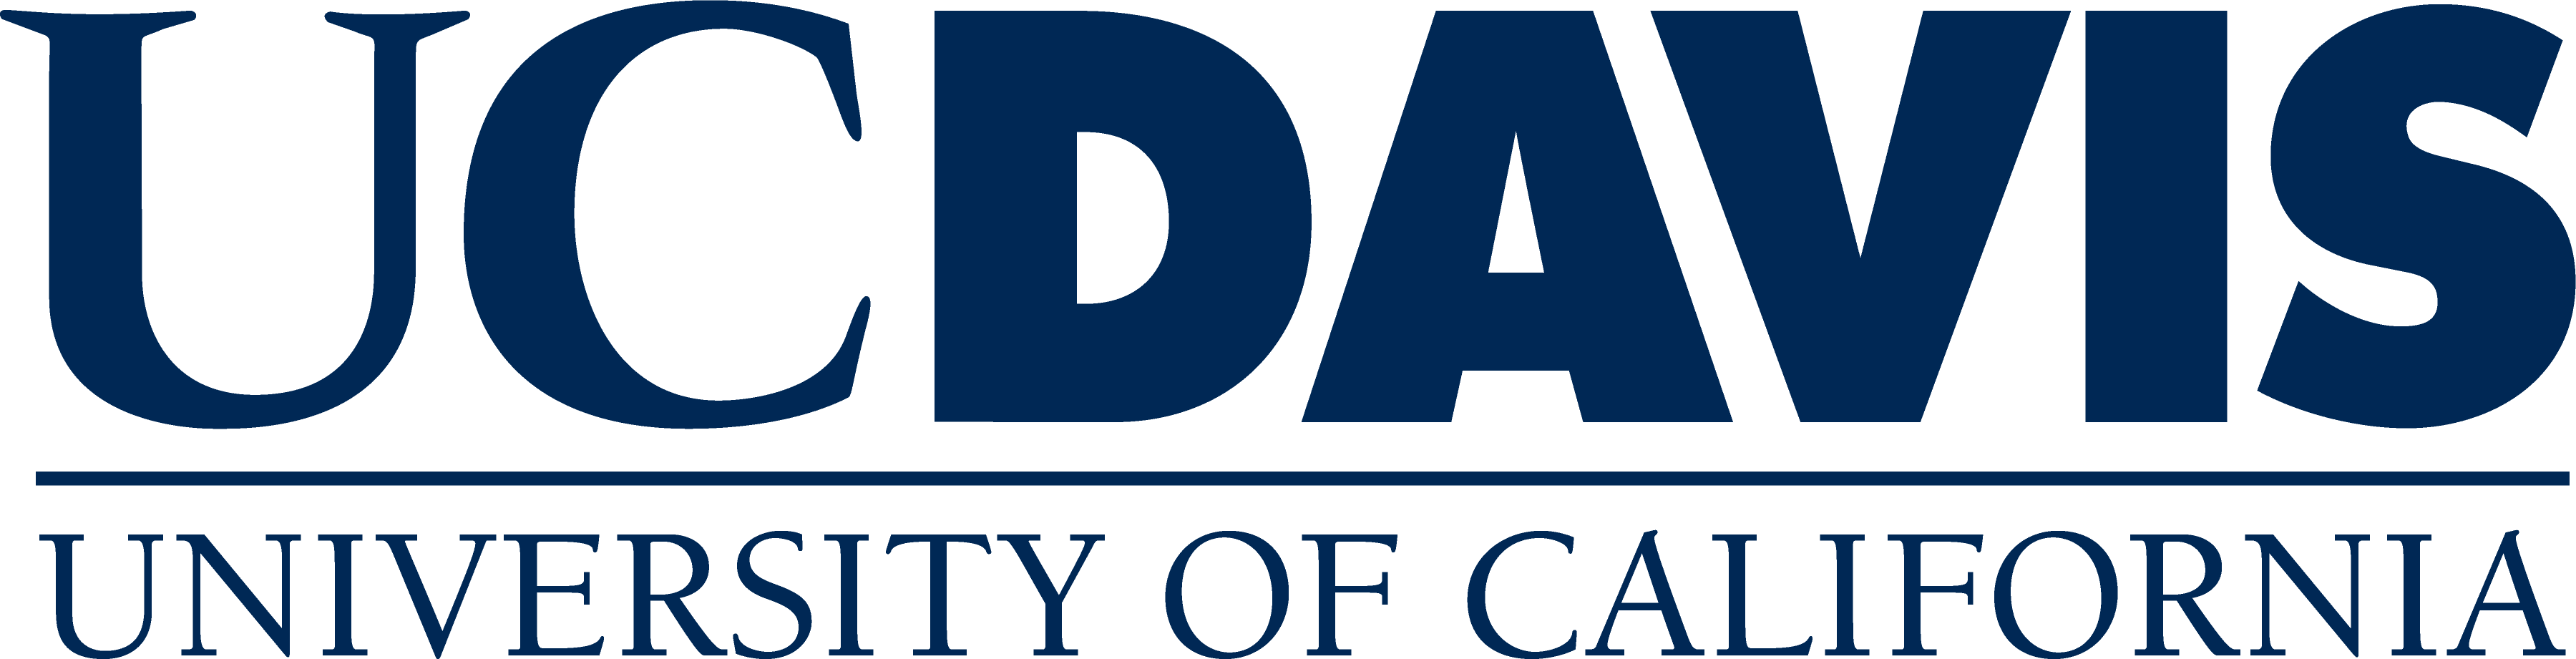 logo UC Davis - University of California, Davis